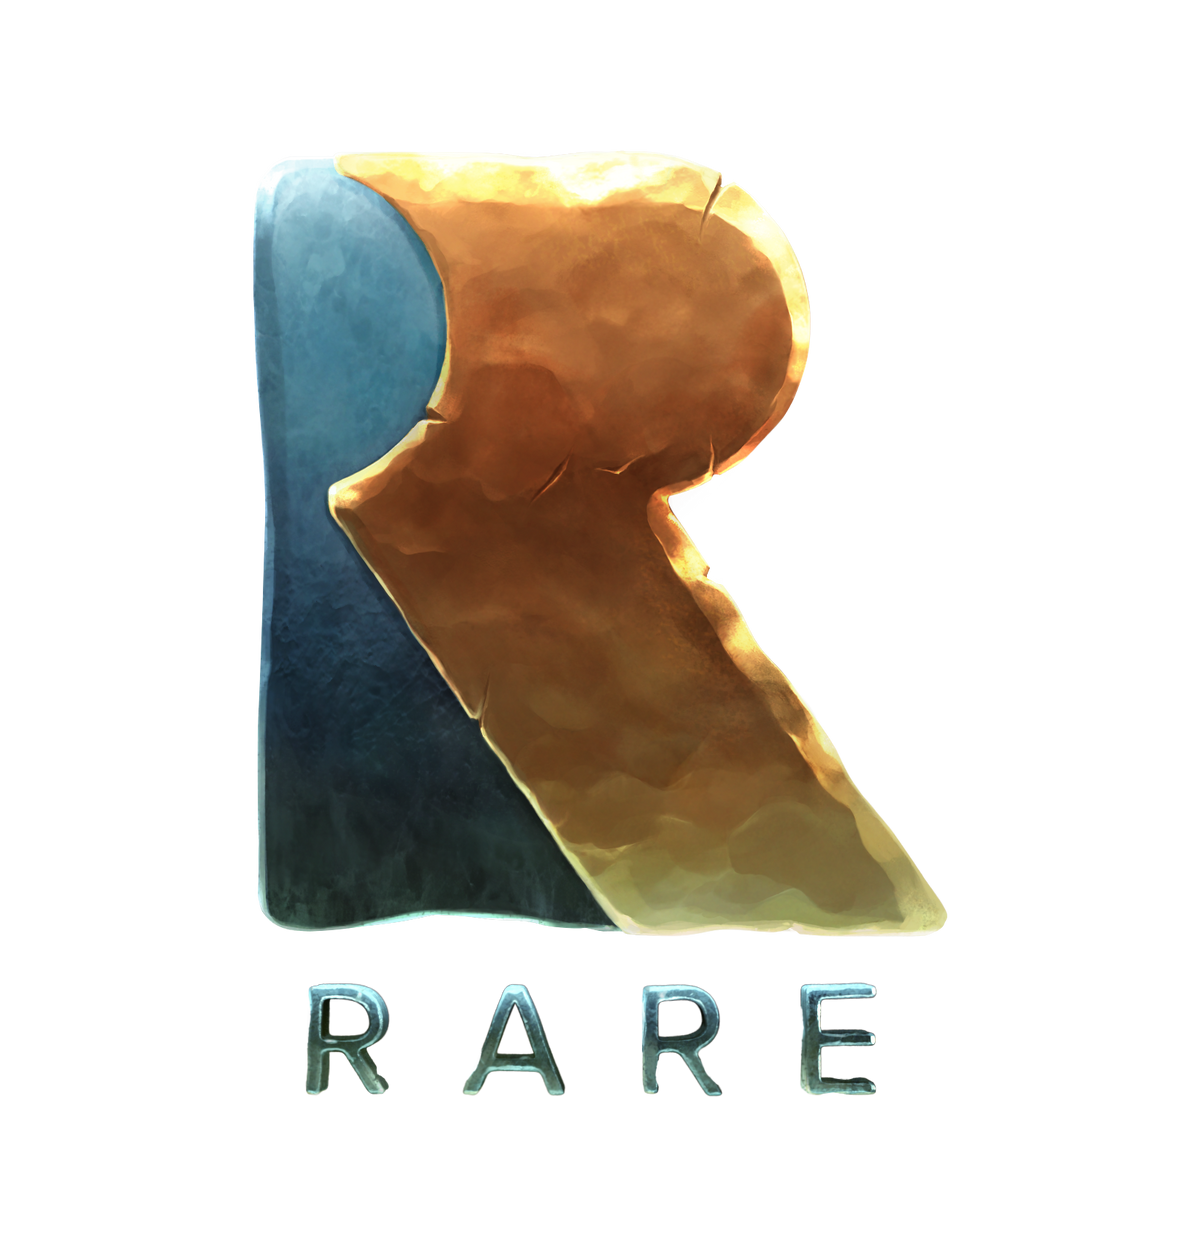 Rare Ltd